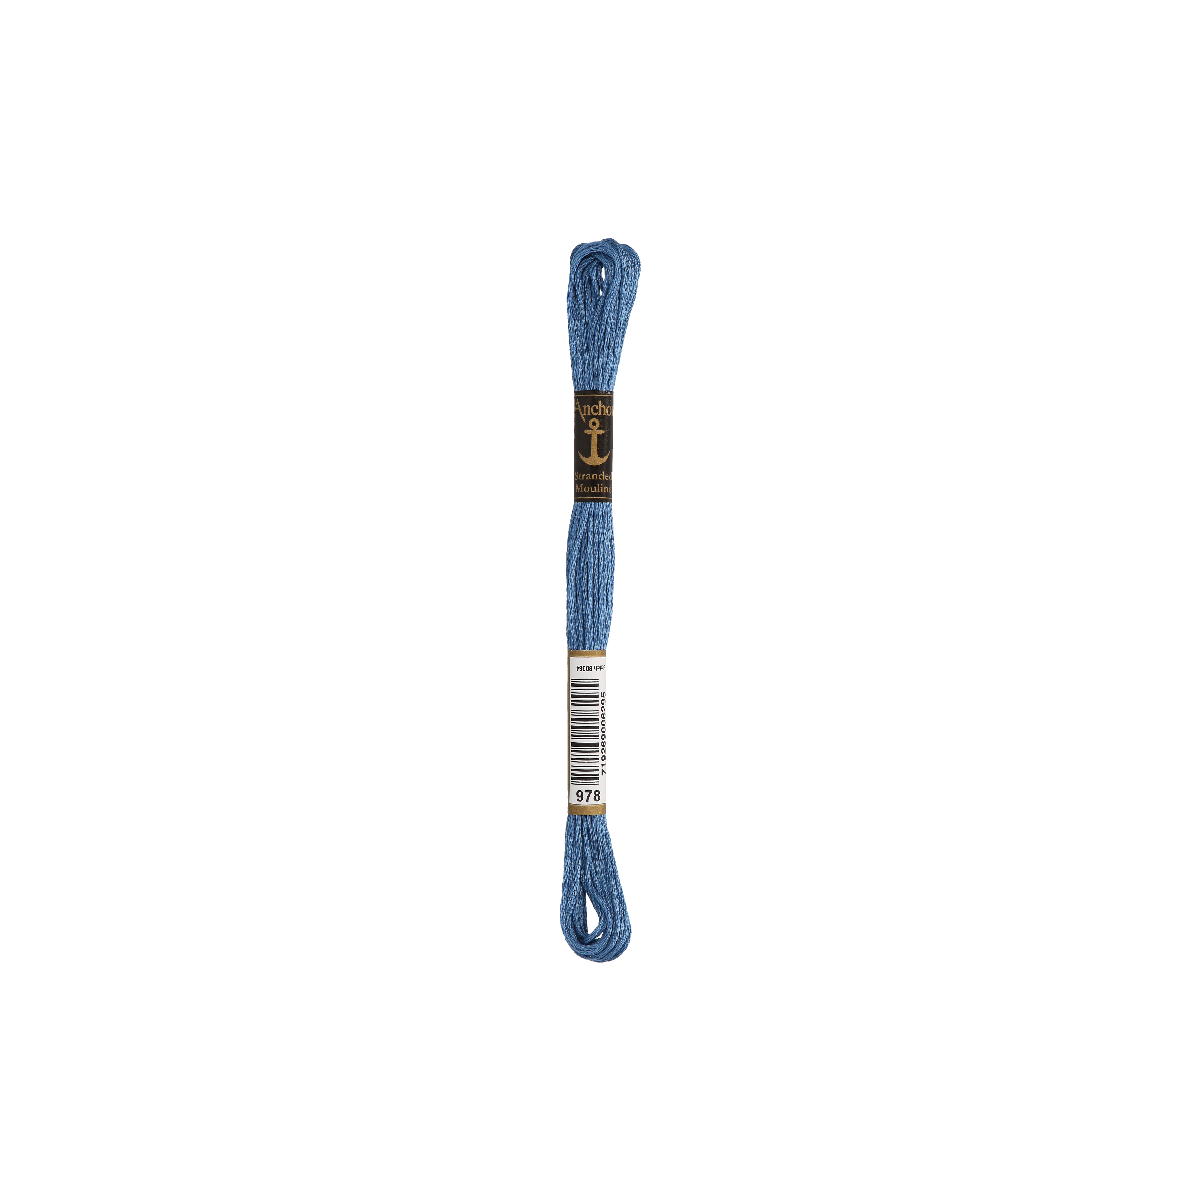 Anchor Torsade 8m, bleu acier, coton, couleur 978, 6 fils